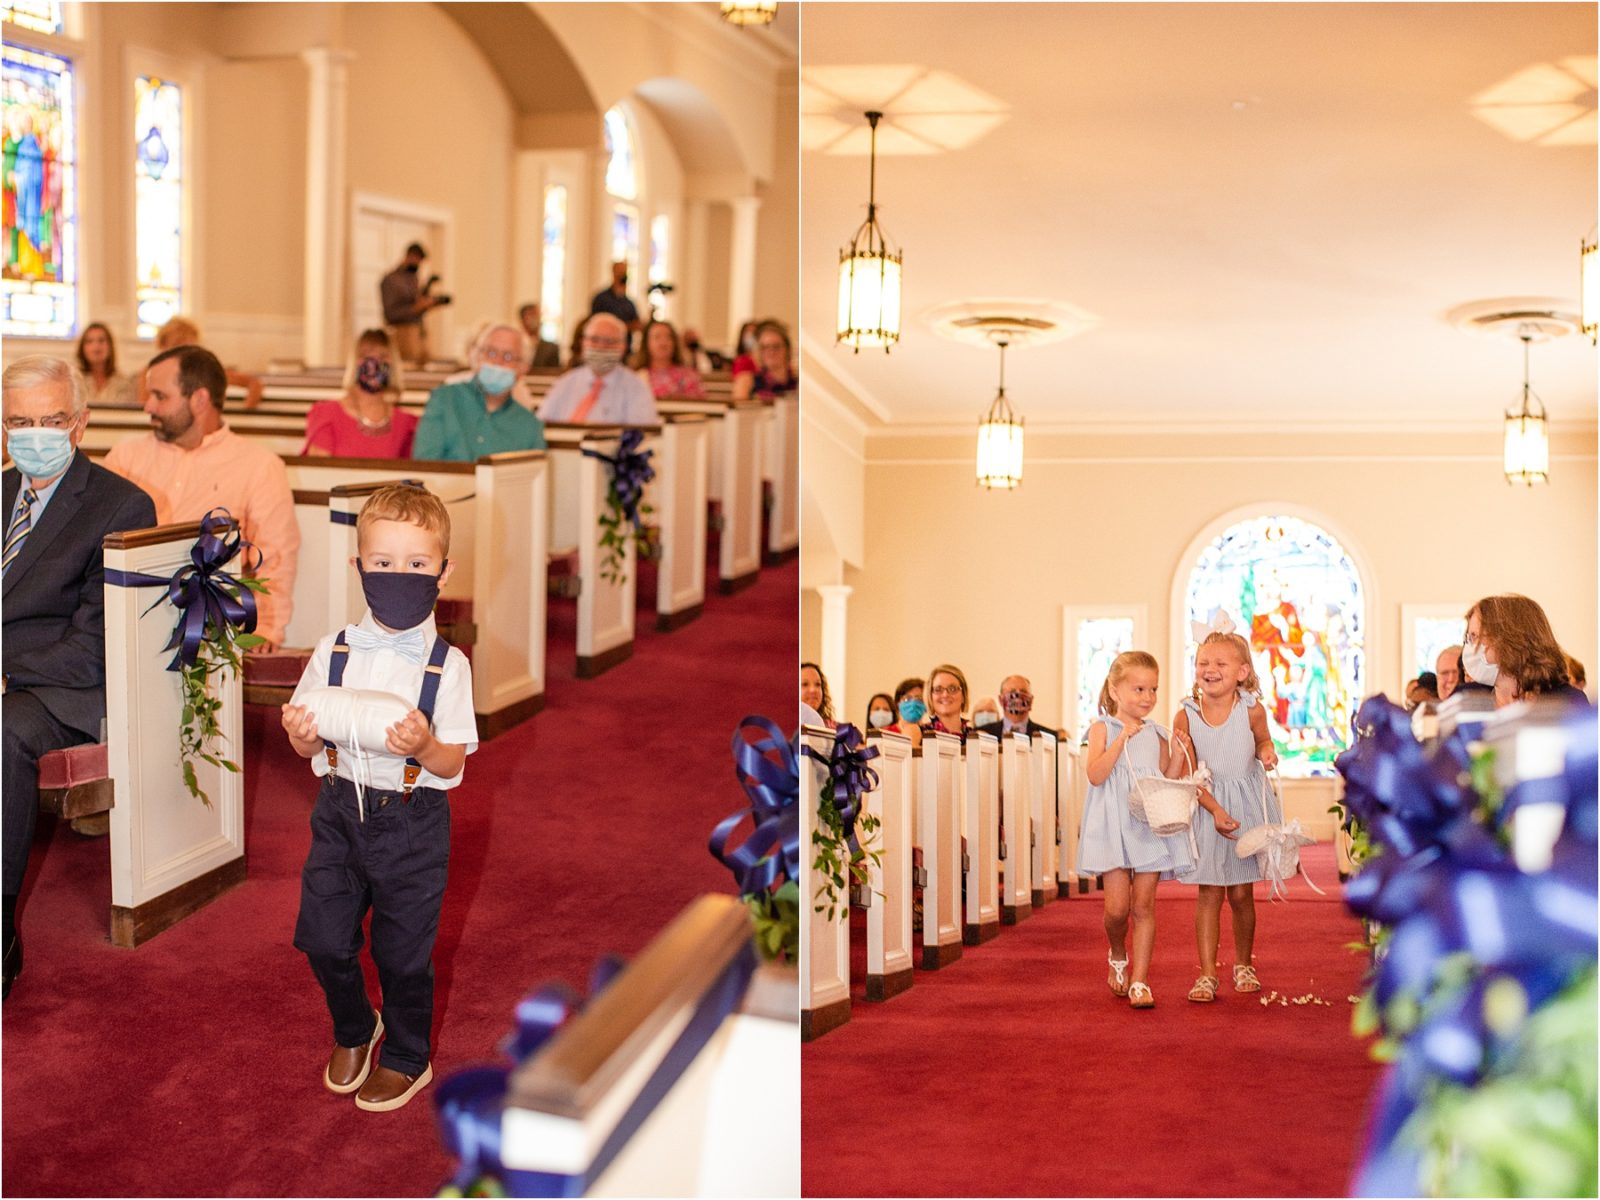 Ring bearer and flower girls at church wedding